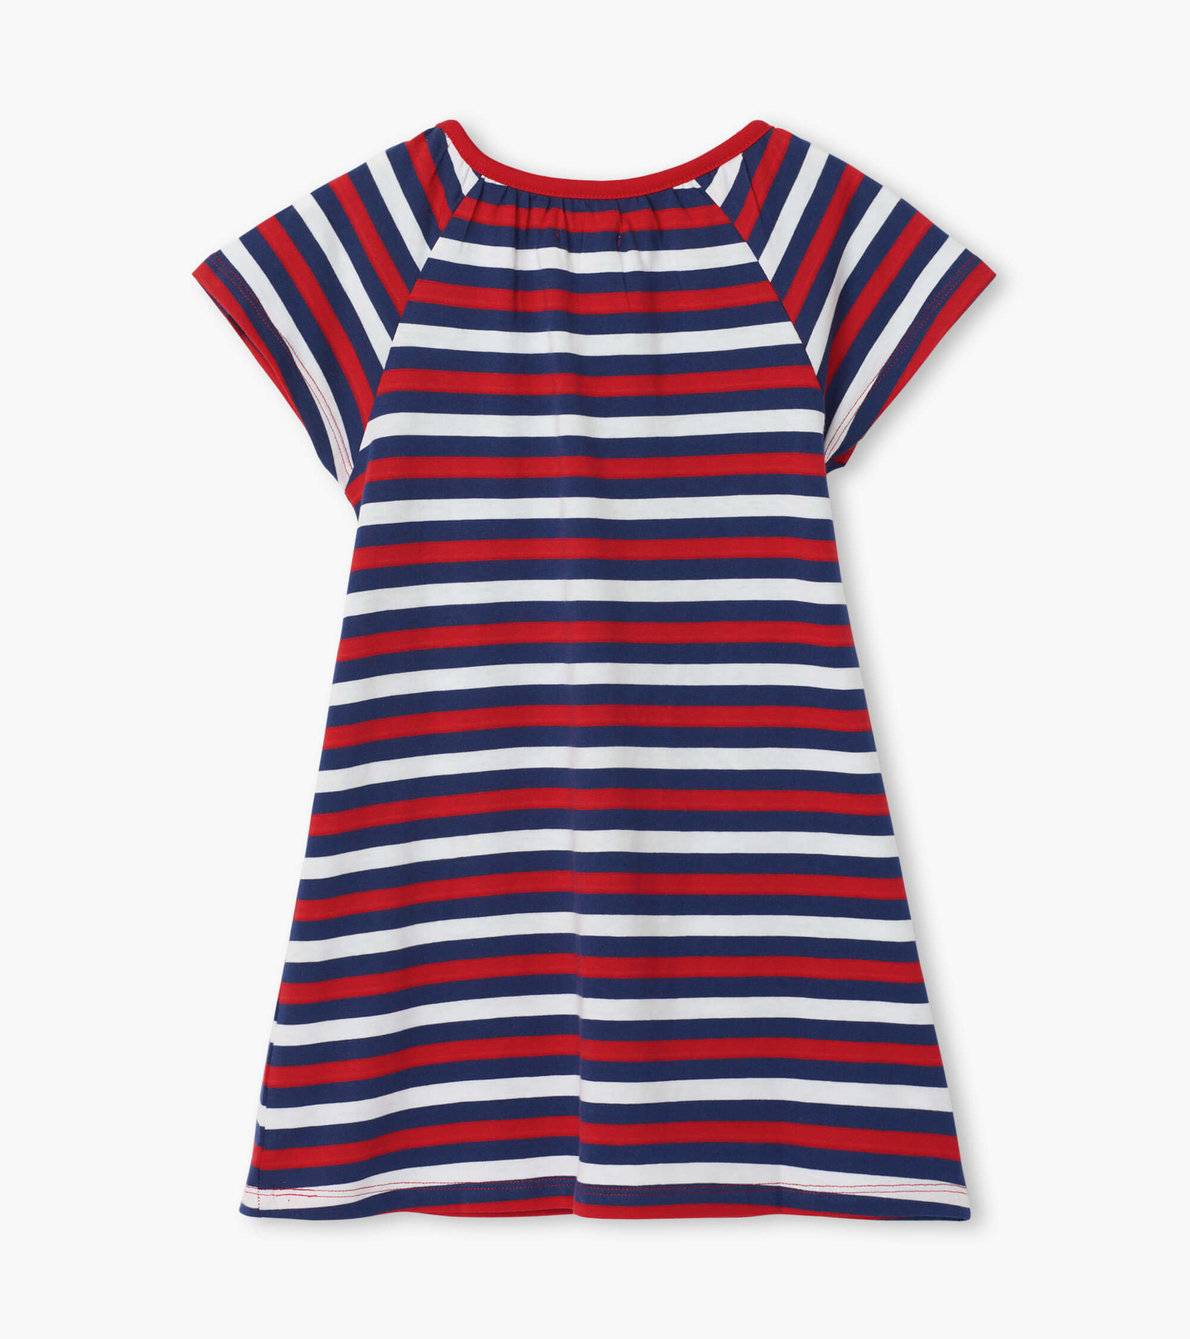 View larger image of Nautical Stripe Tee Shirt Dress